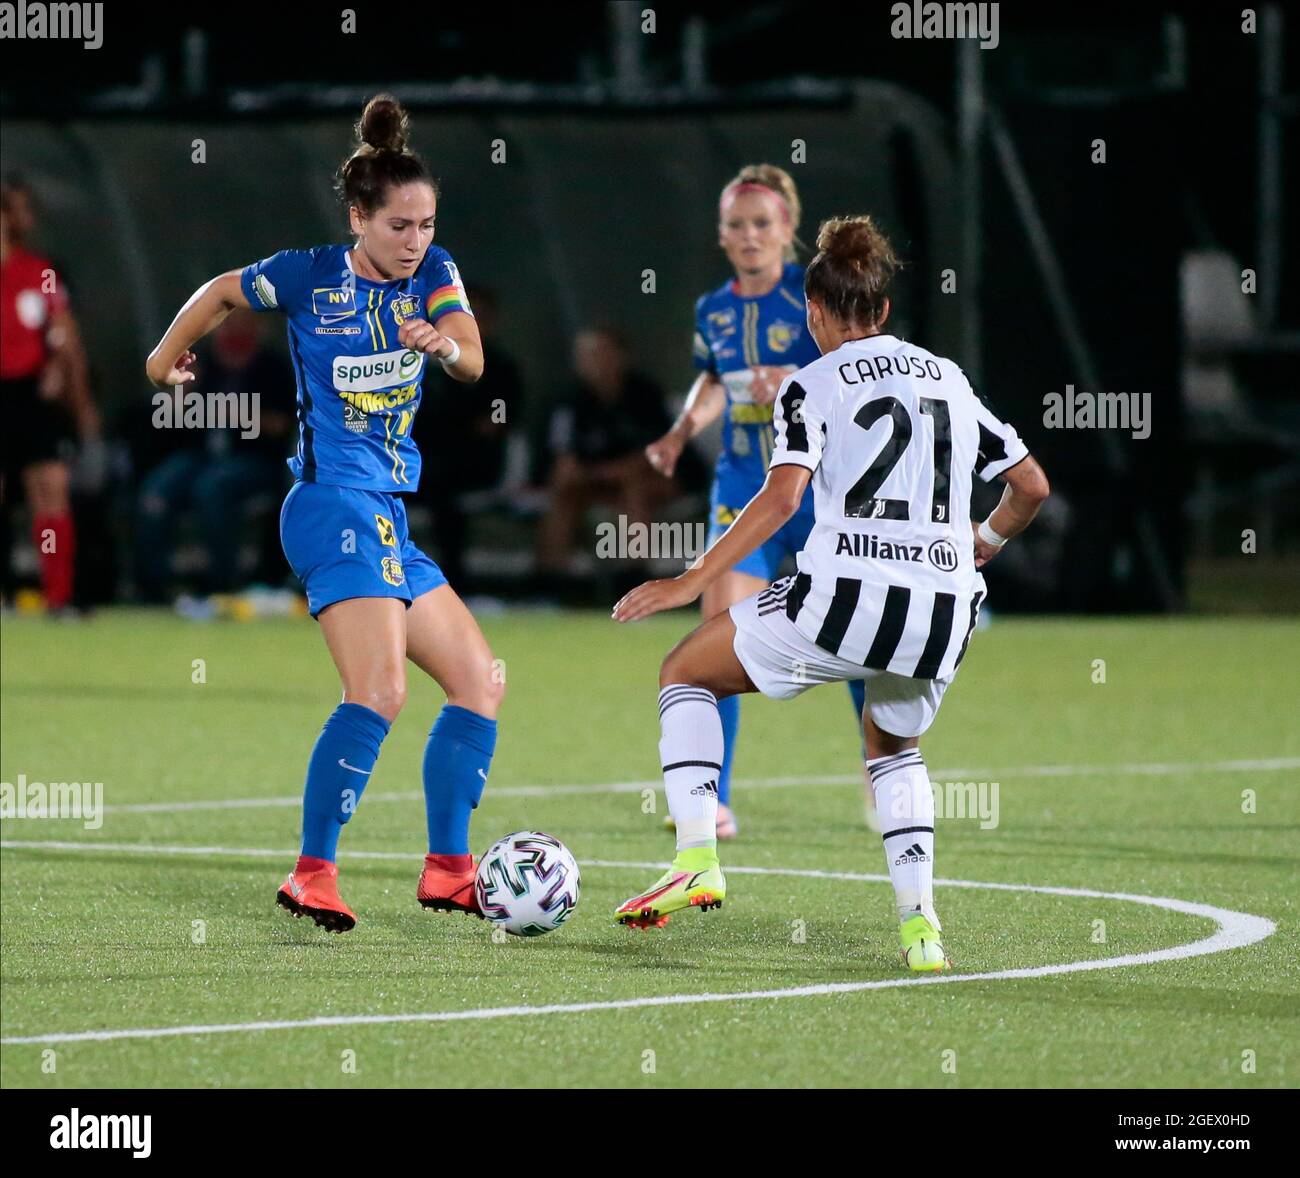 Didem Karagenc (Besiktas Women) during the UEFA Women's Champions League,  Round 1 - CP - Group 8 between